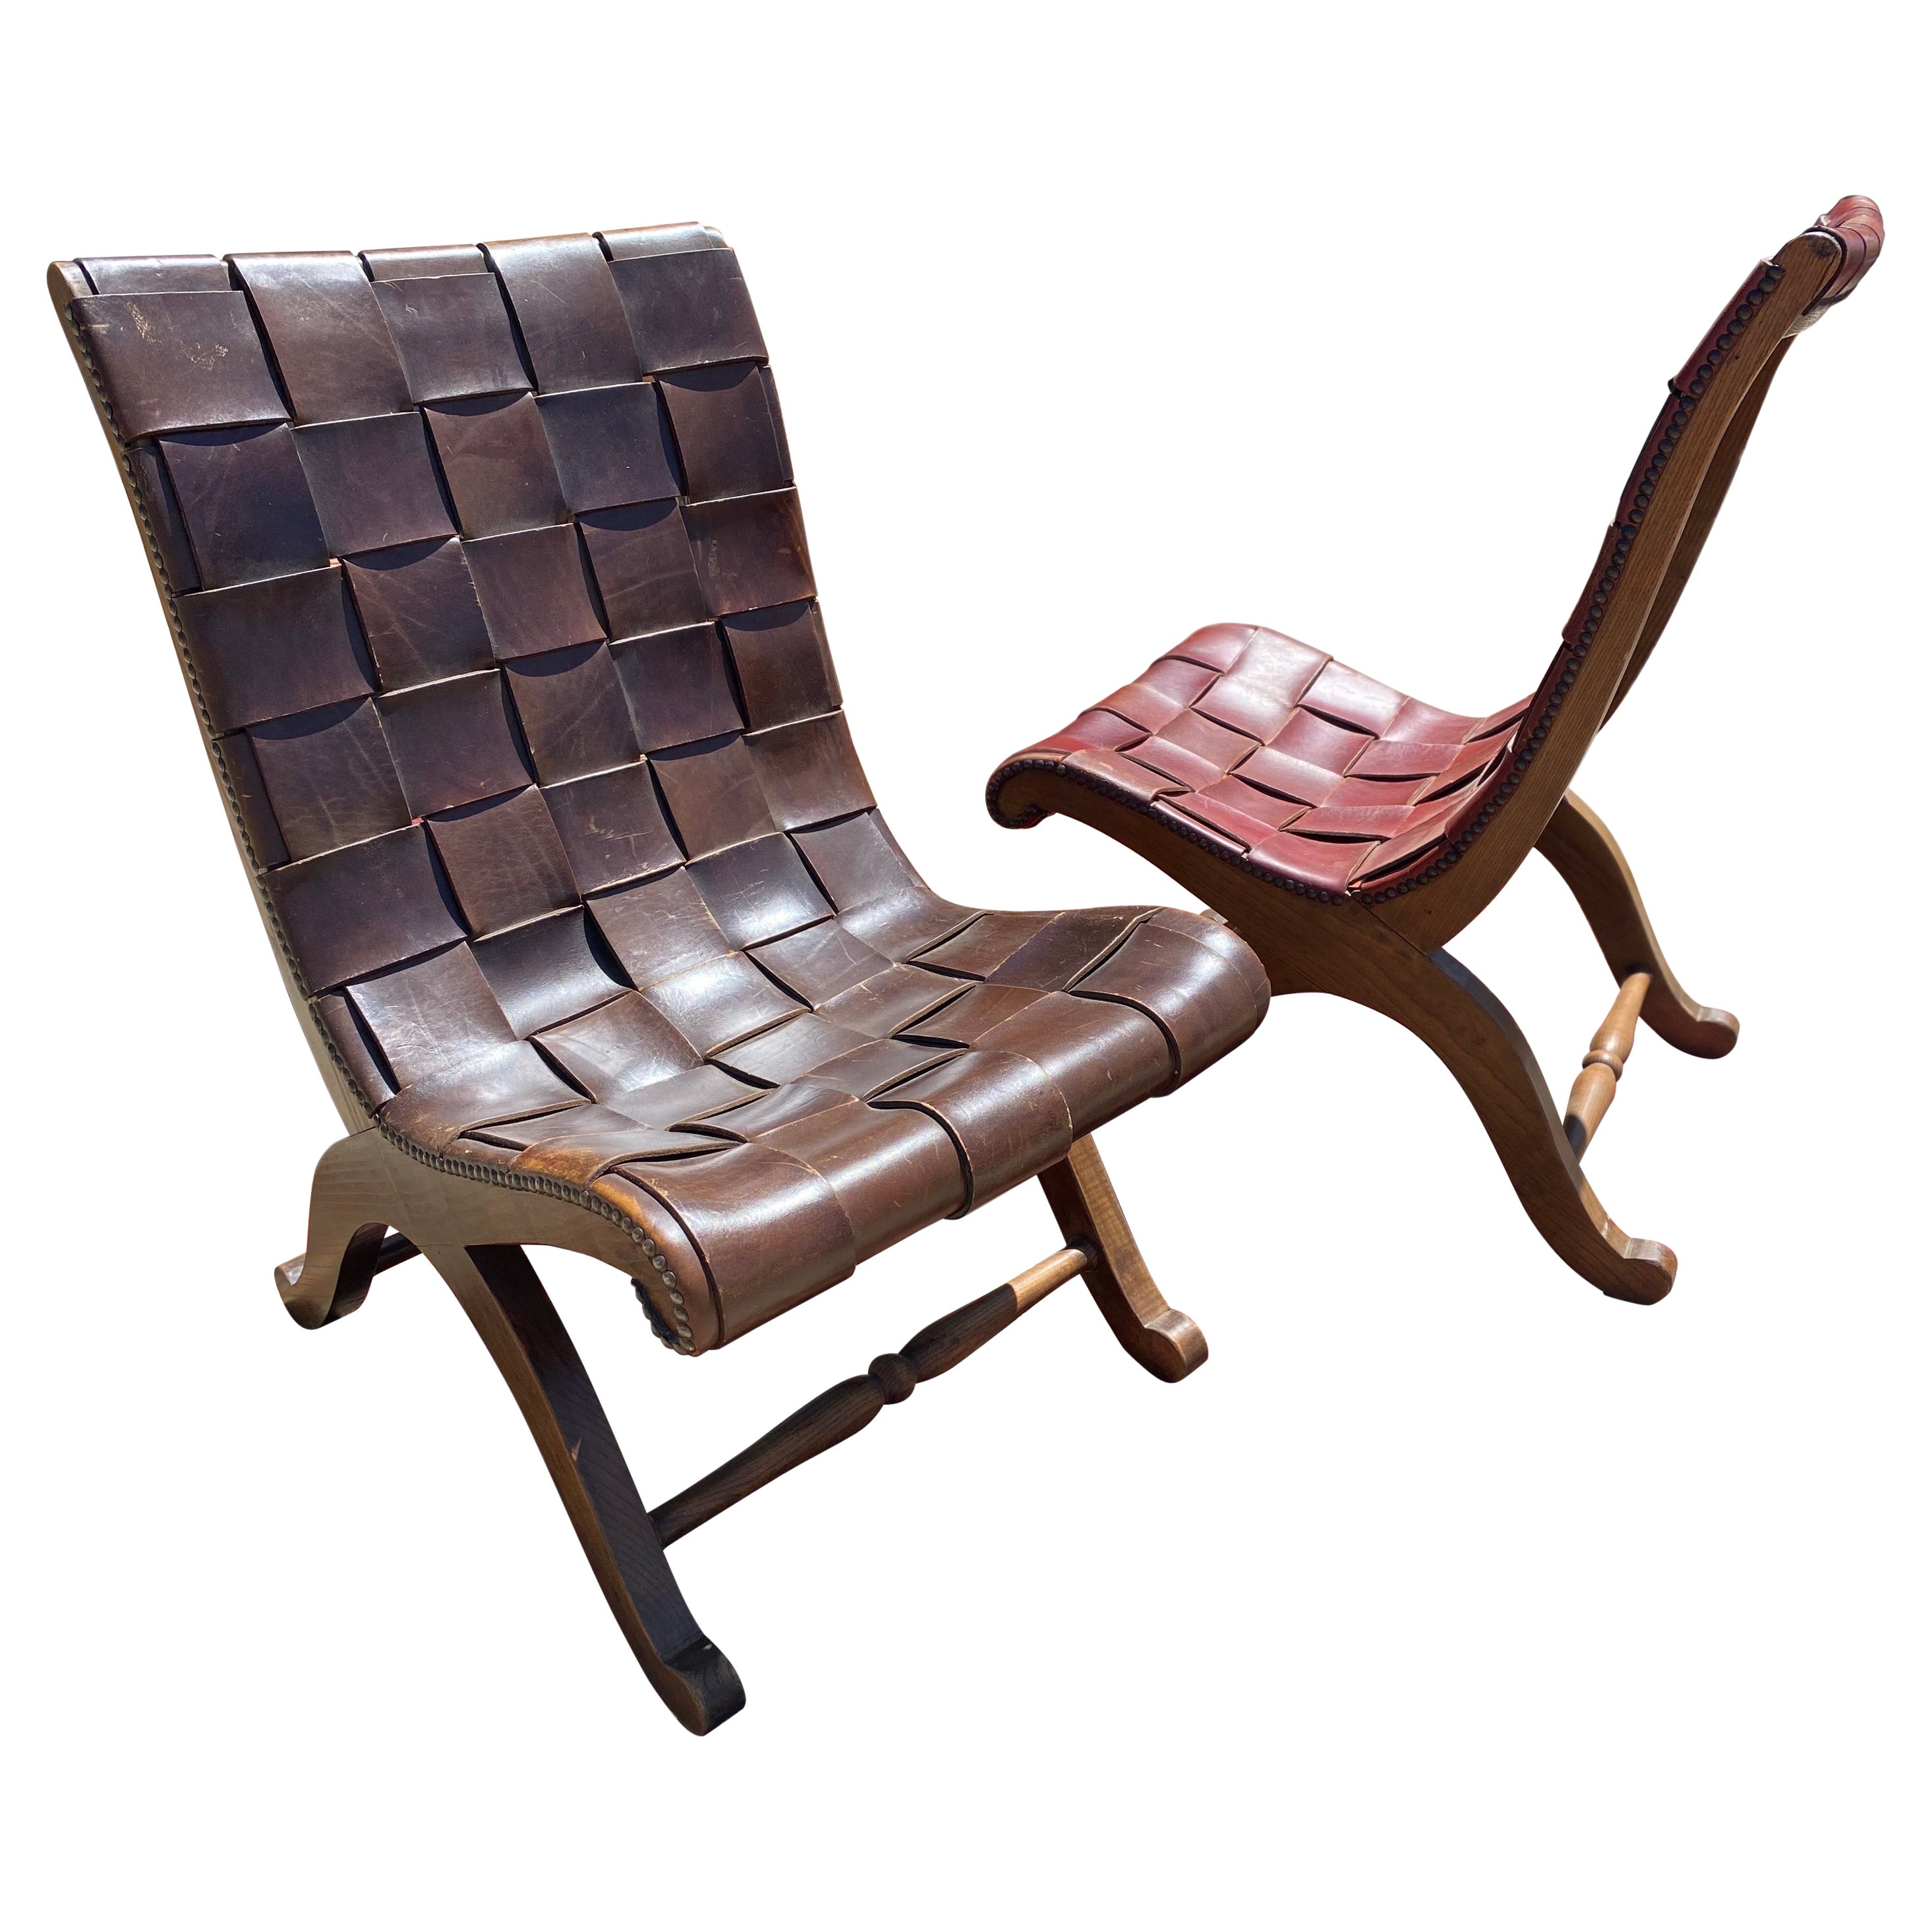 Leather Pierre Lottier Slipper Chairs, Spain, Circa 1950s